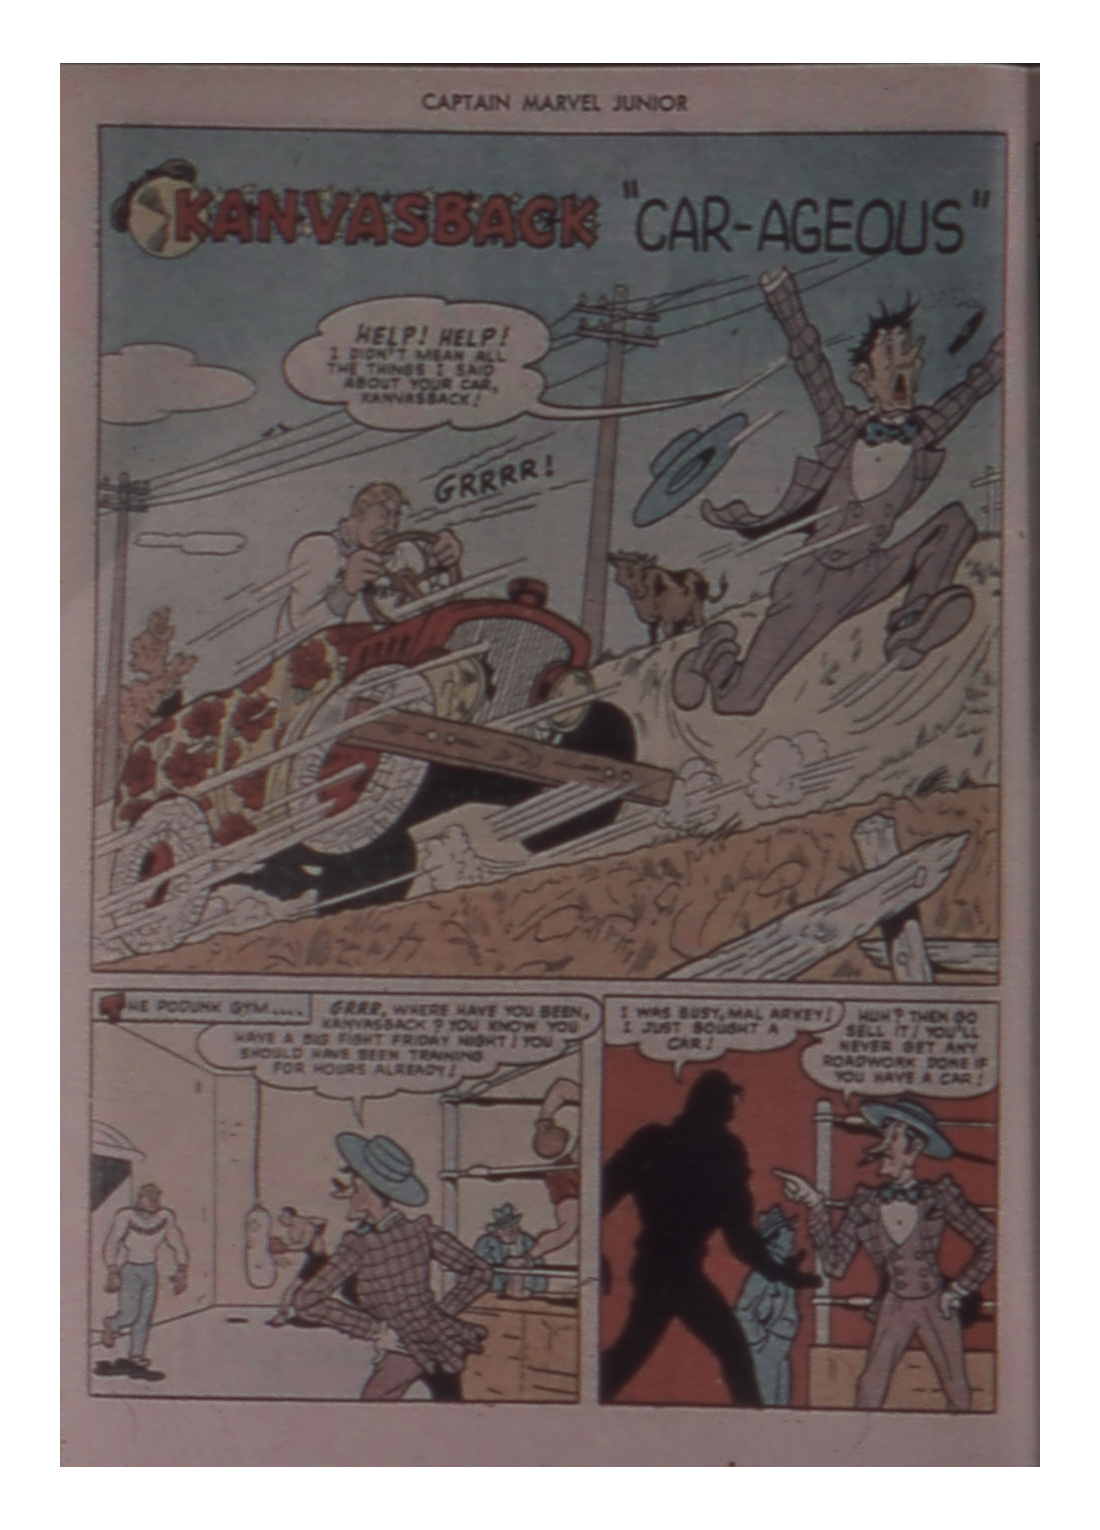 Read online Captain Marvel, Jr. comic -  Issue #81 - 36